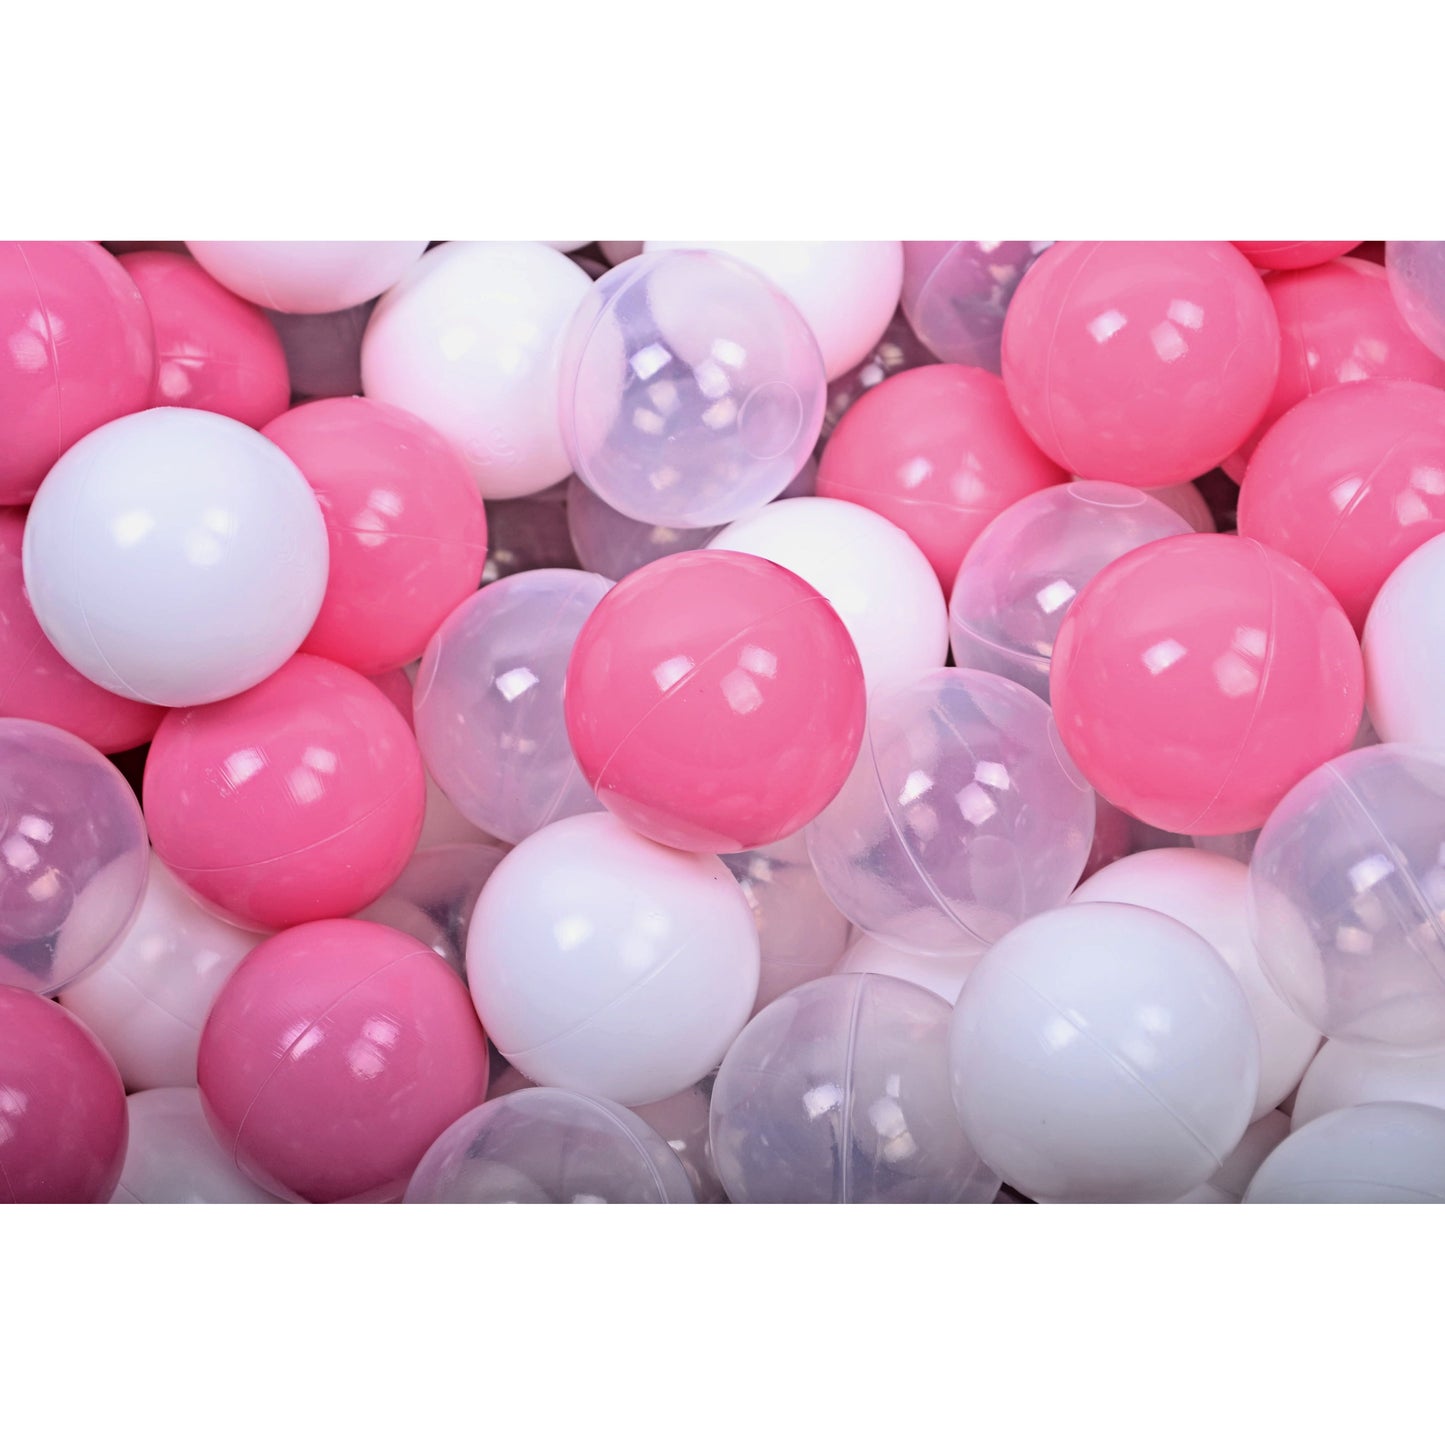 Violet Velvet Round Foam Ball Pit - Select Your Own Balls